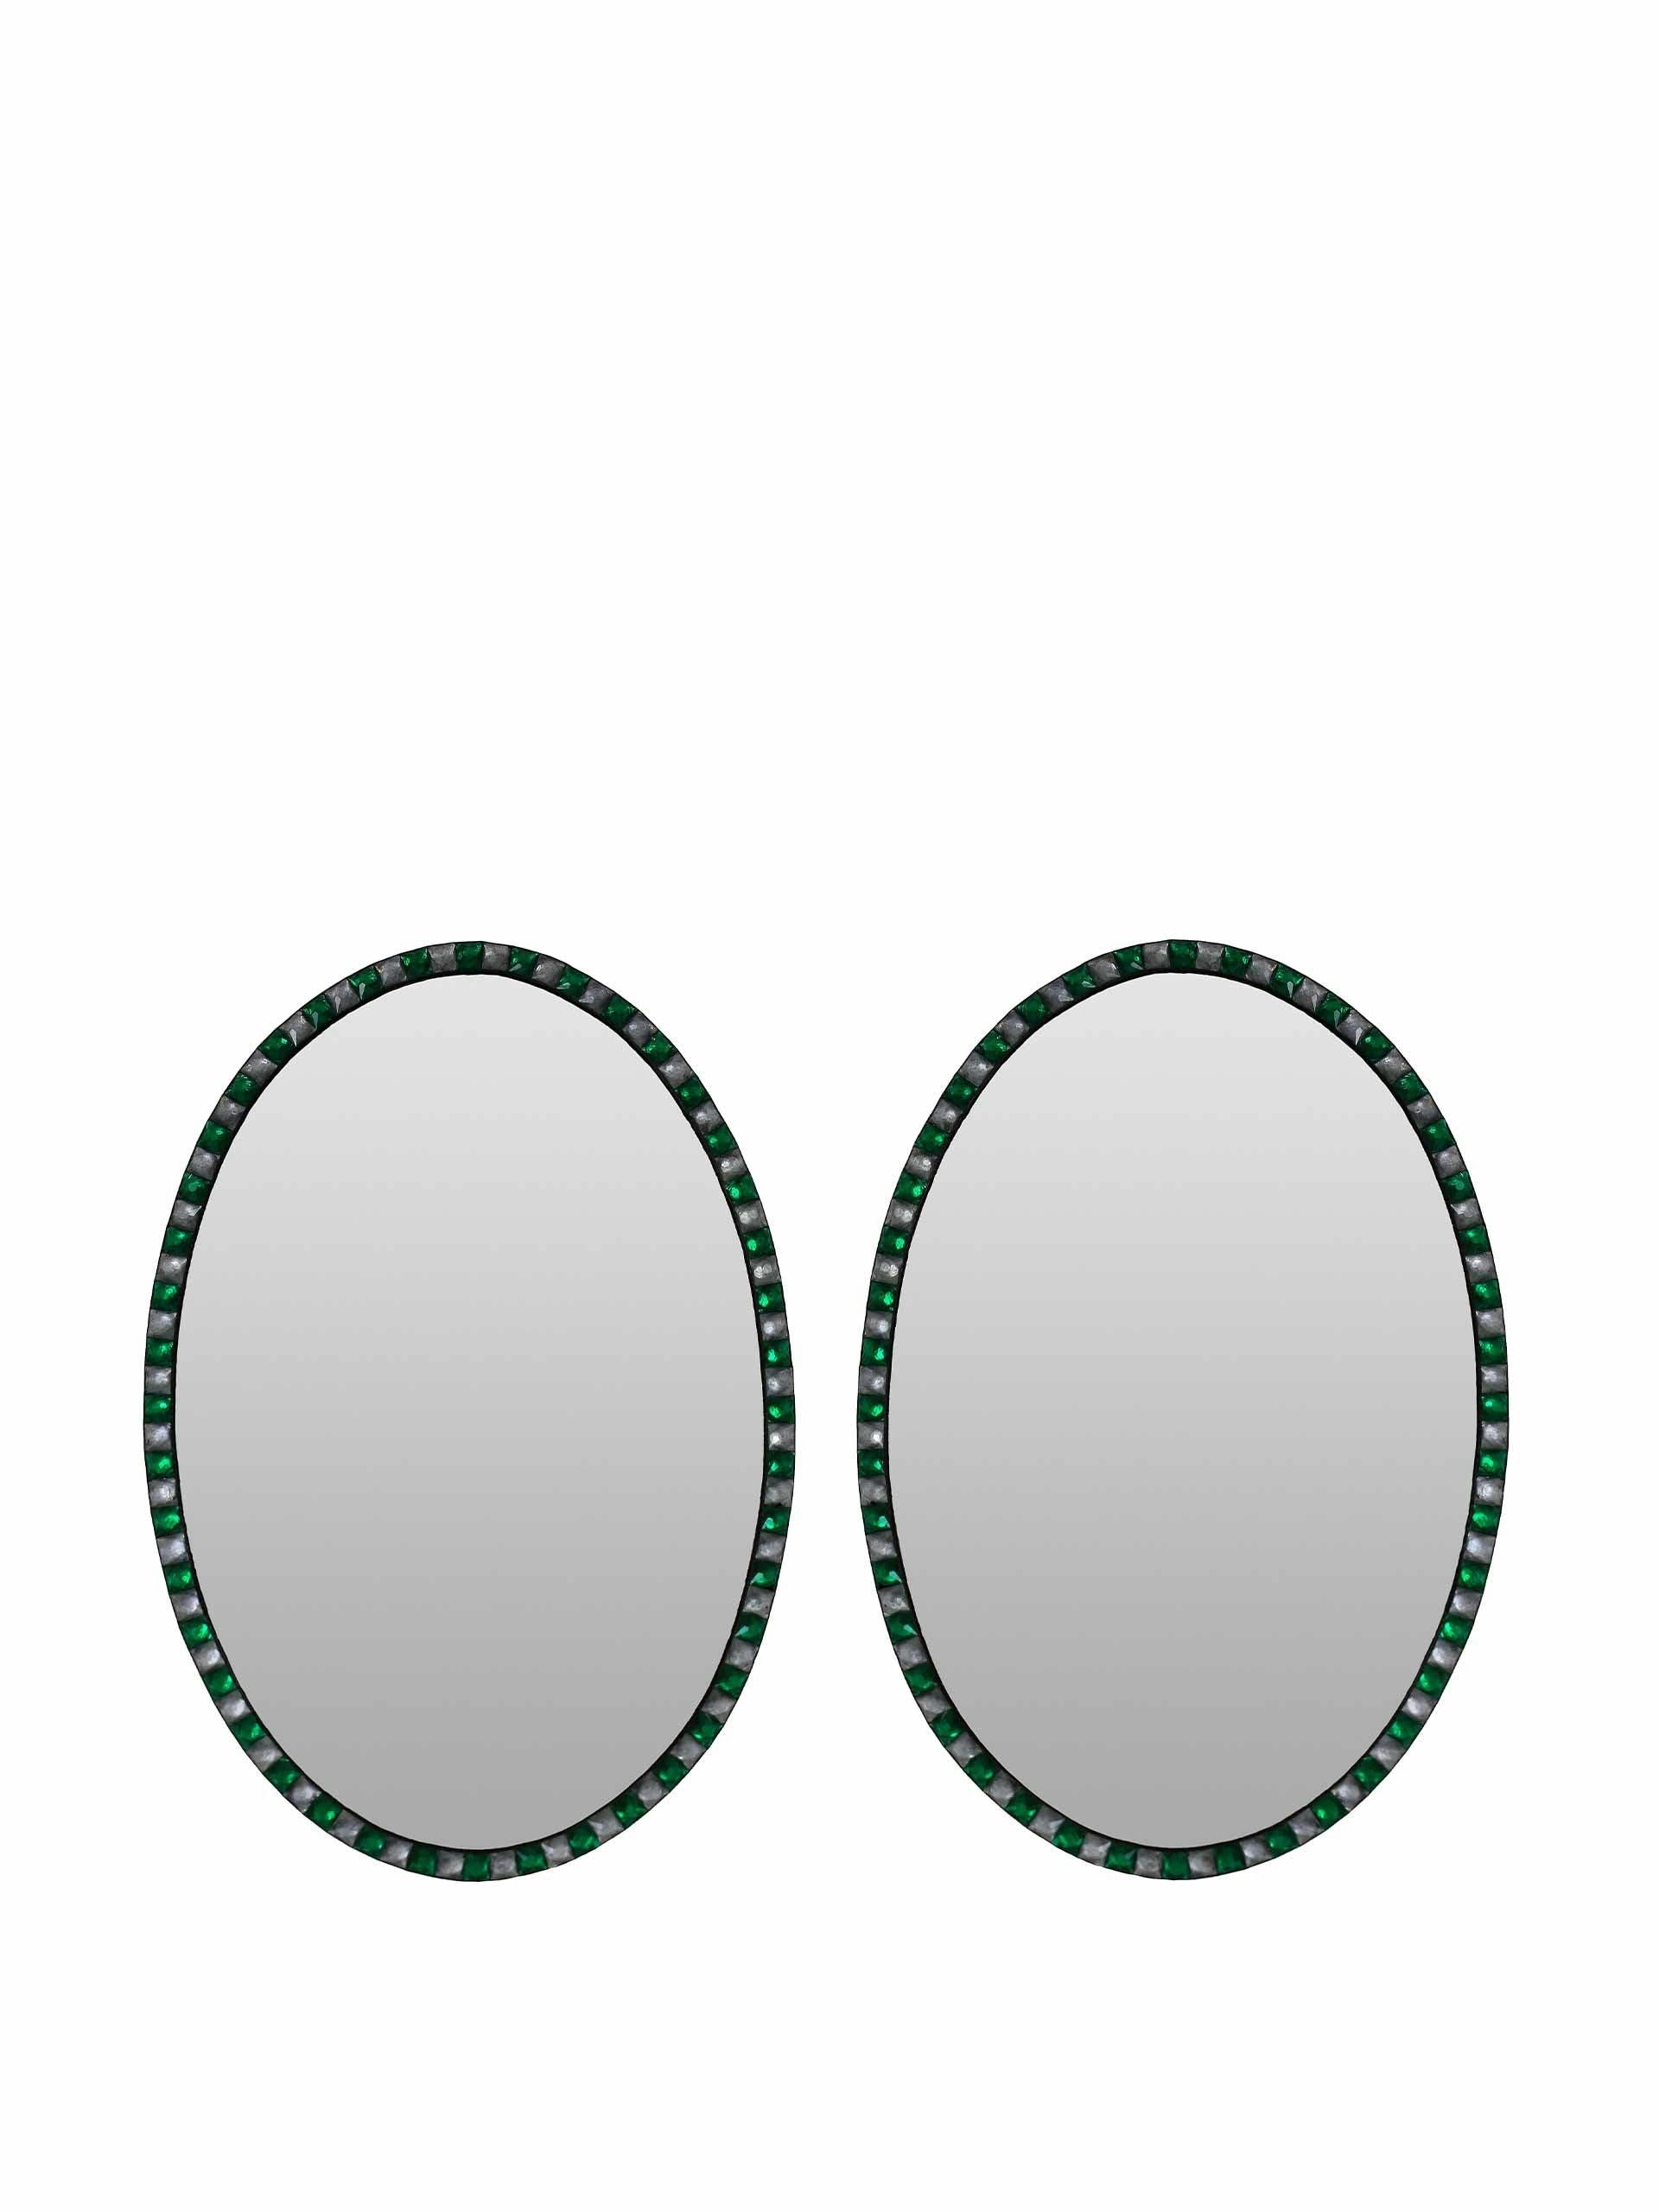 Georgian style Irish mirrors with emerald and rock crystal boarder